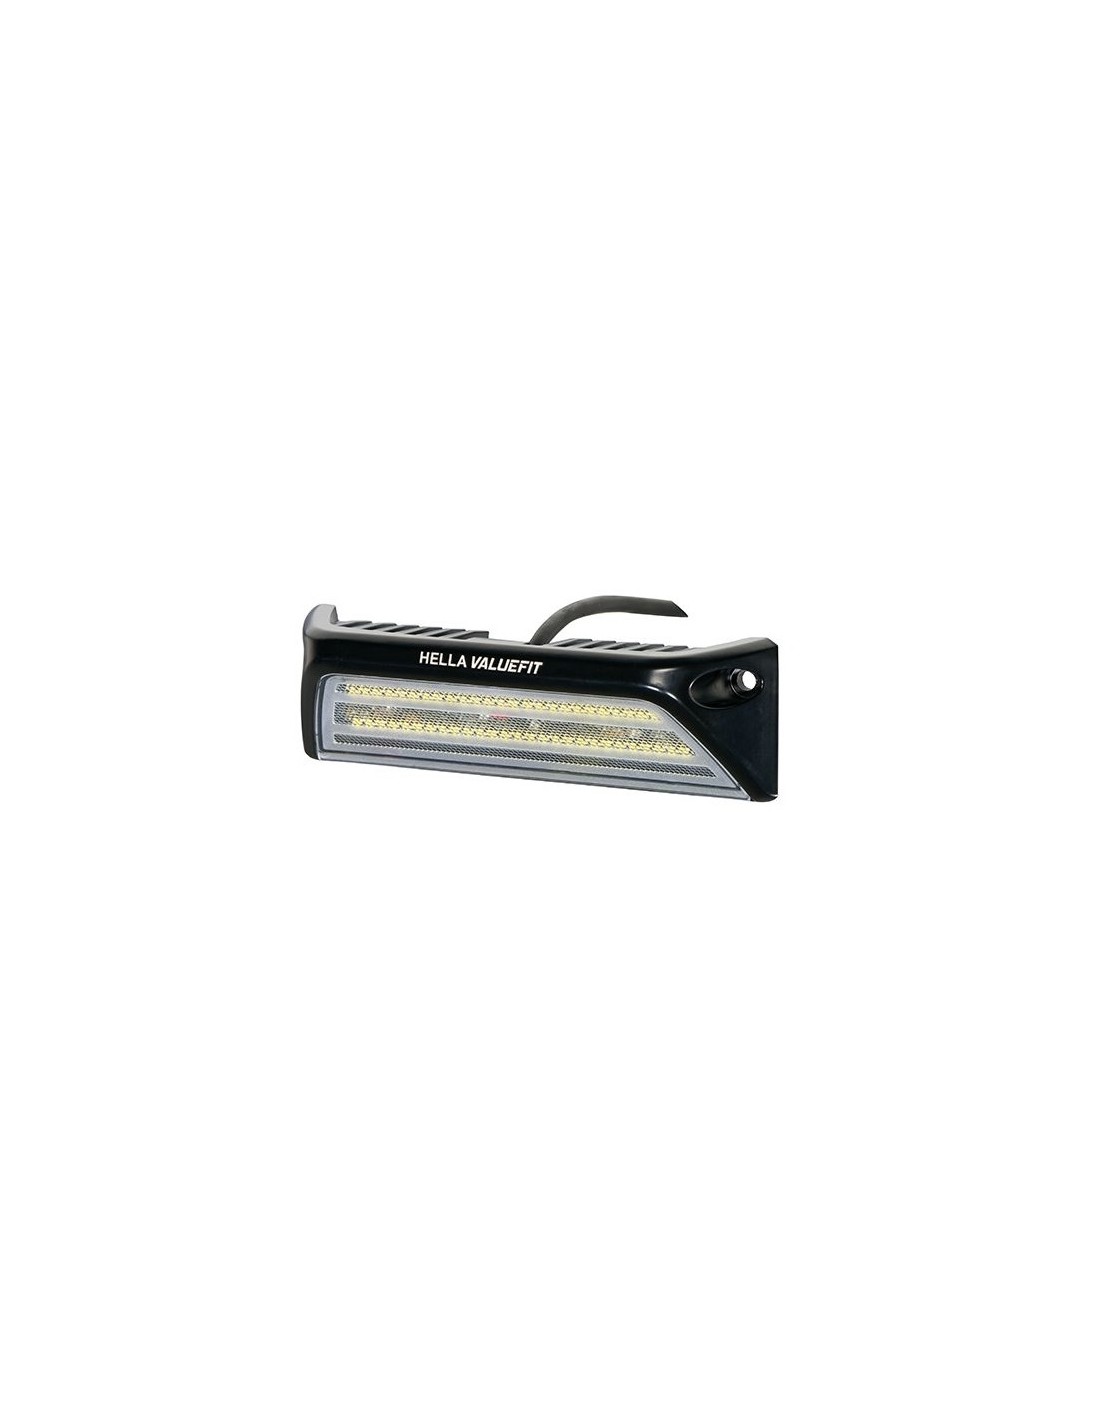 Hella LED-Arbeitsscheinwerfer Valuefit SMS2000 12/24V